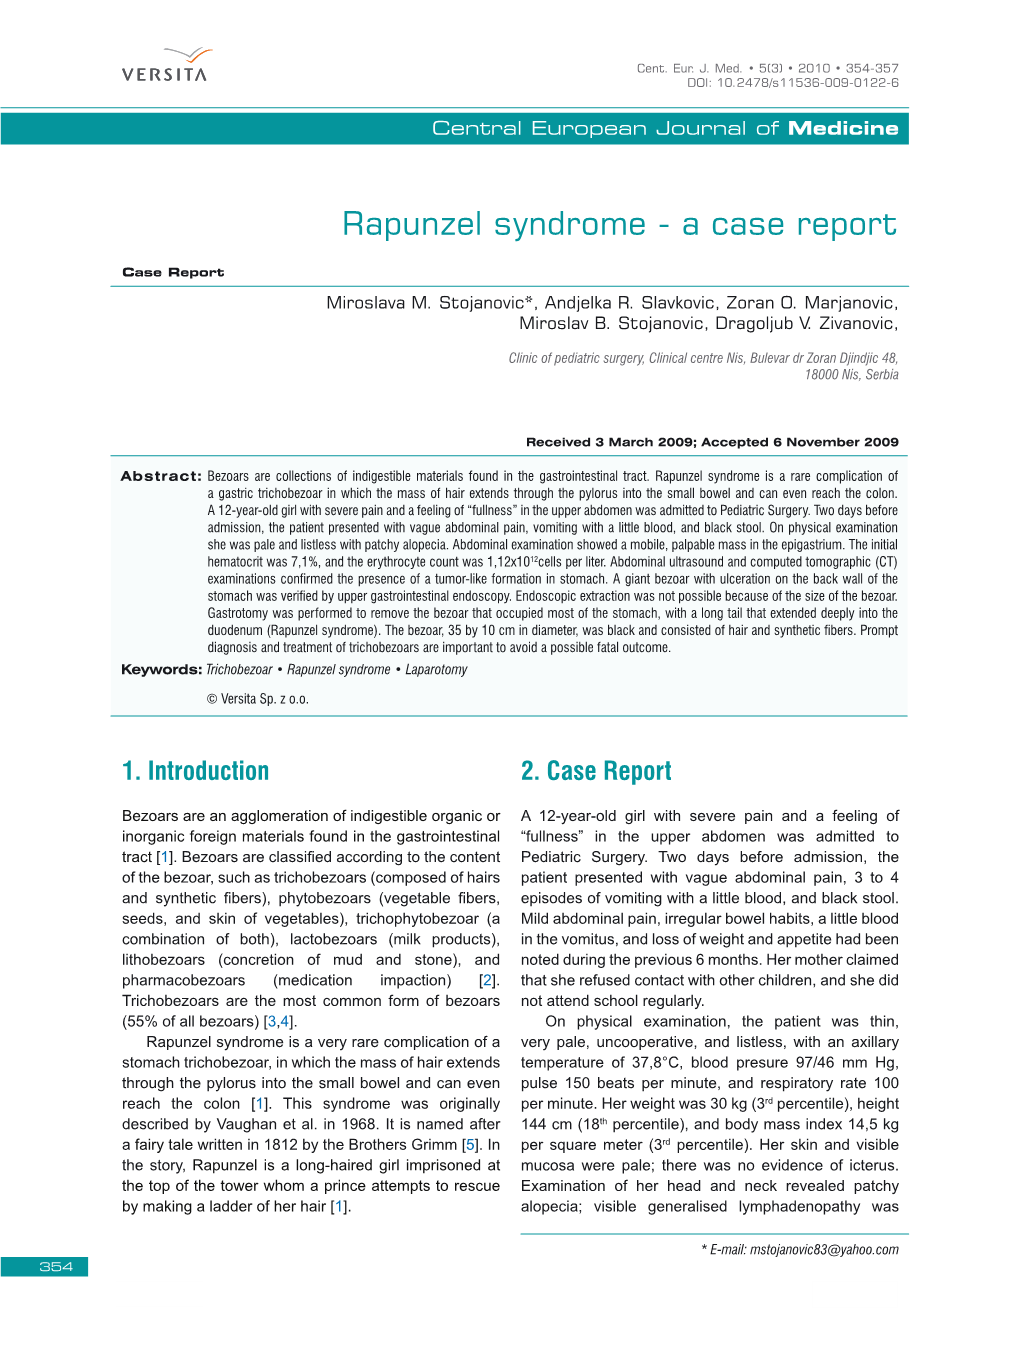 Rapunzel Syndrome - a Case Report